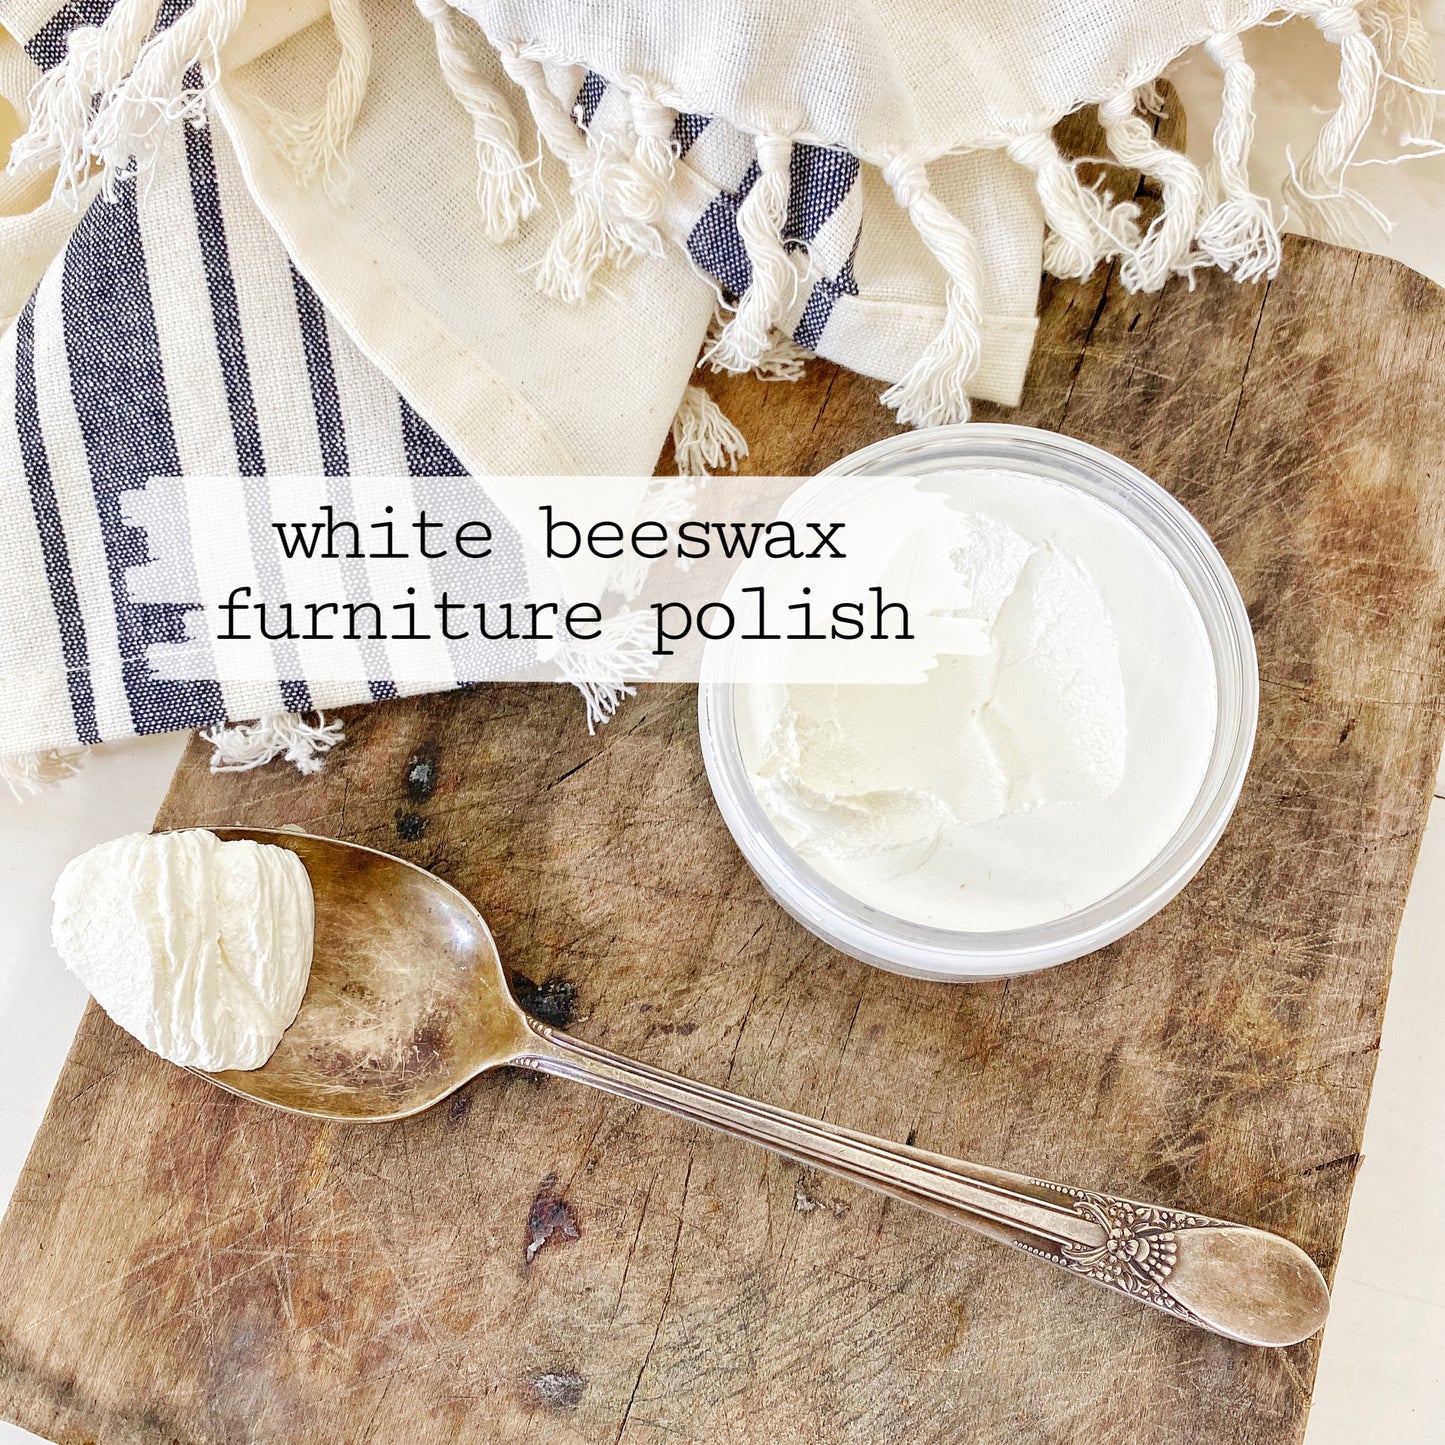 How to Make Natural Beeswax Furniture Polish (Three Recipes